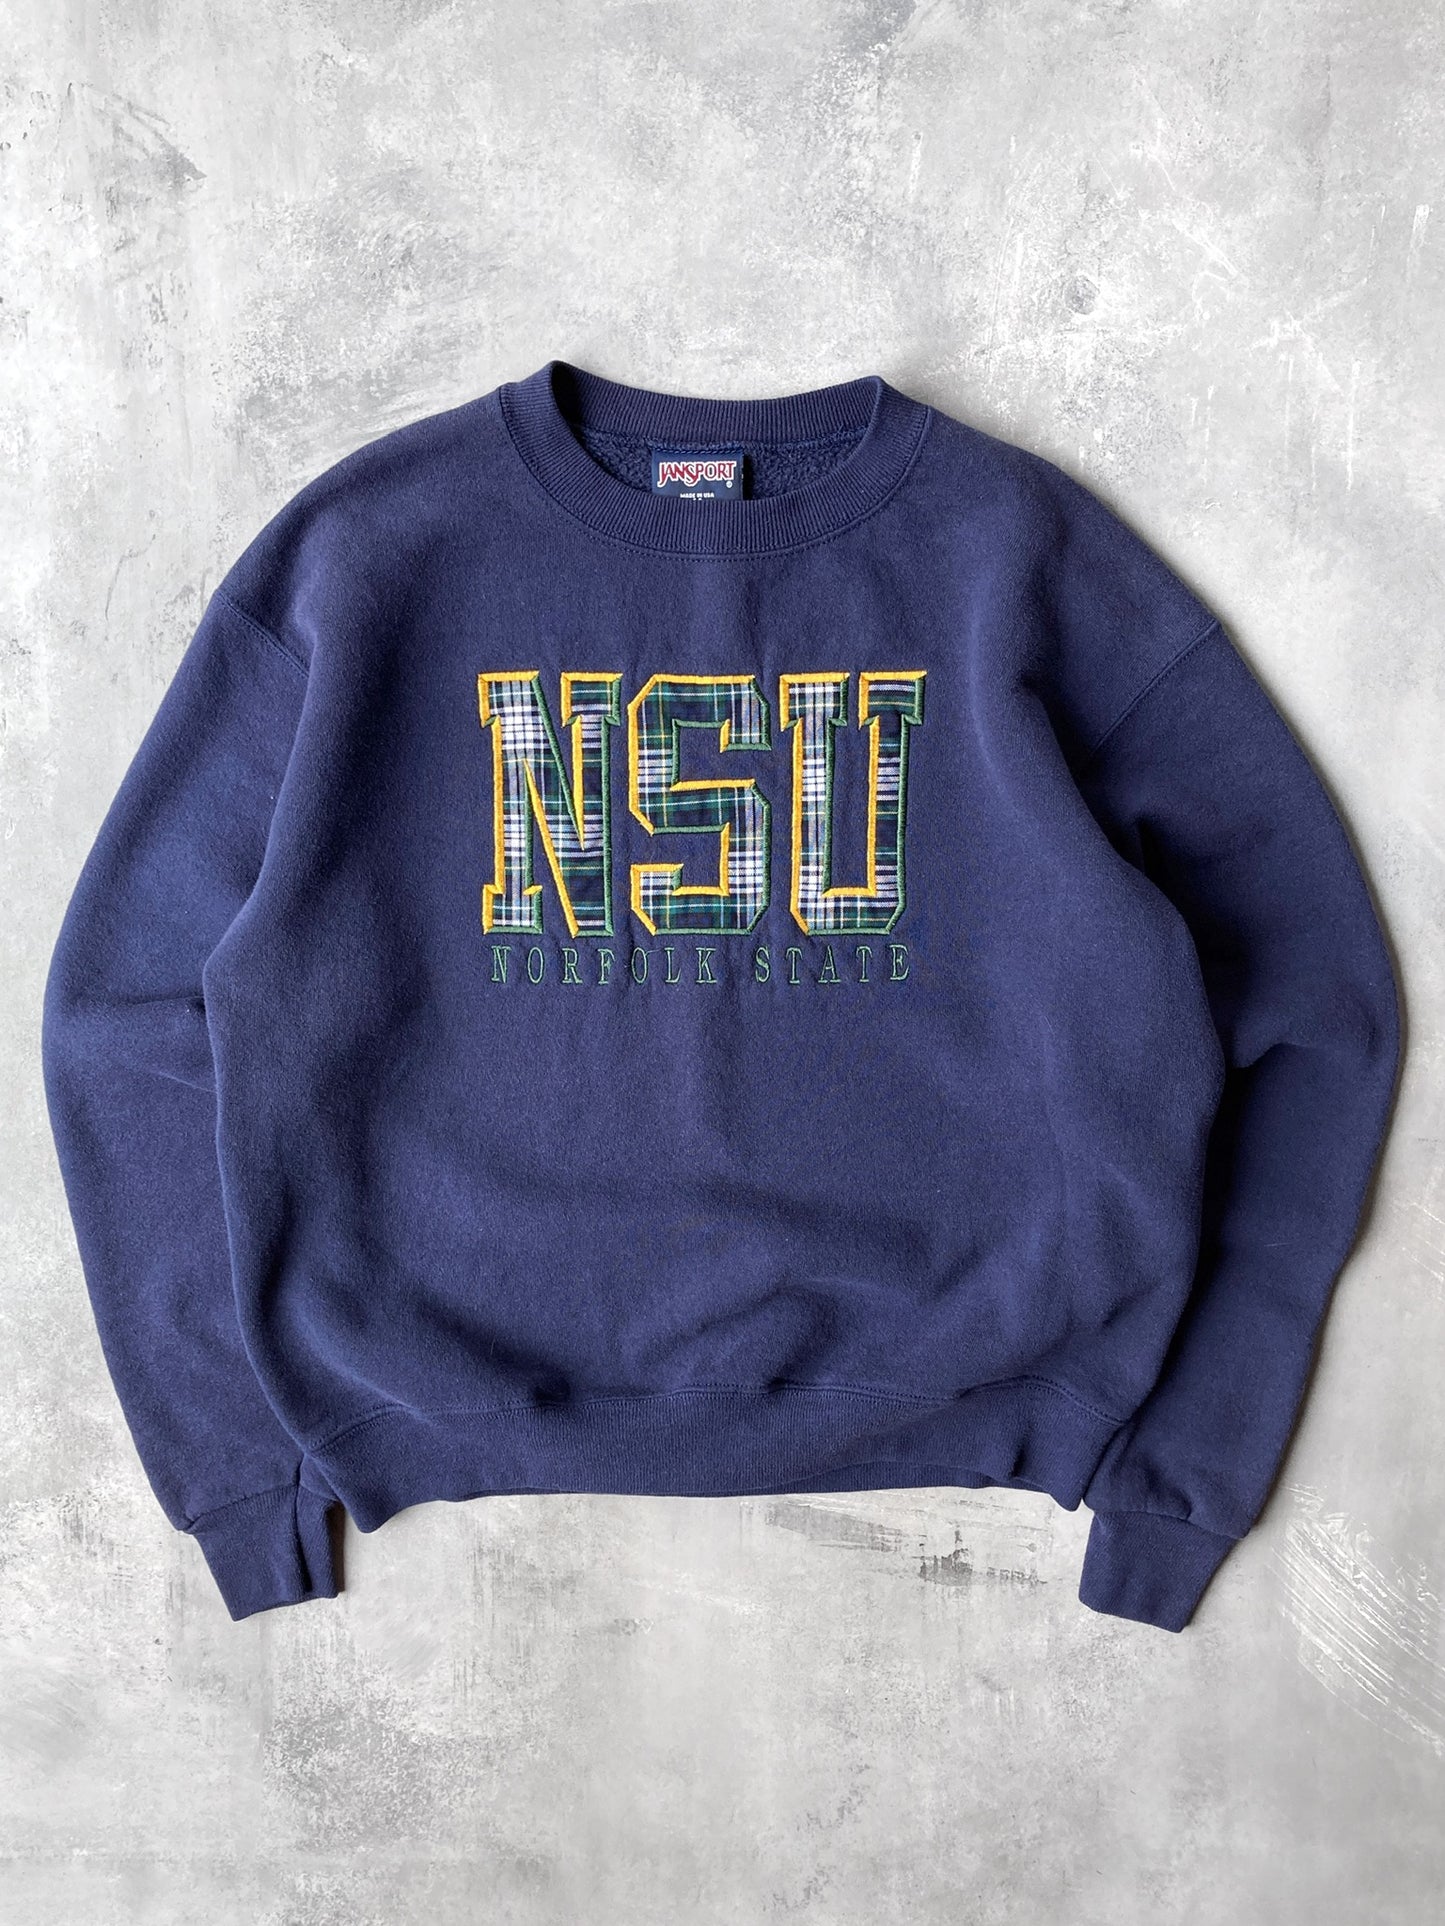 Norfolk State University Sweatshirt 90's  - Medium